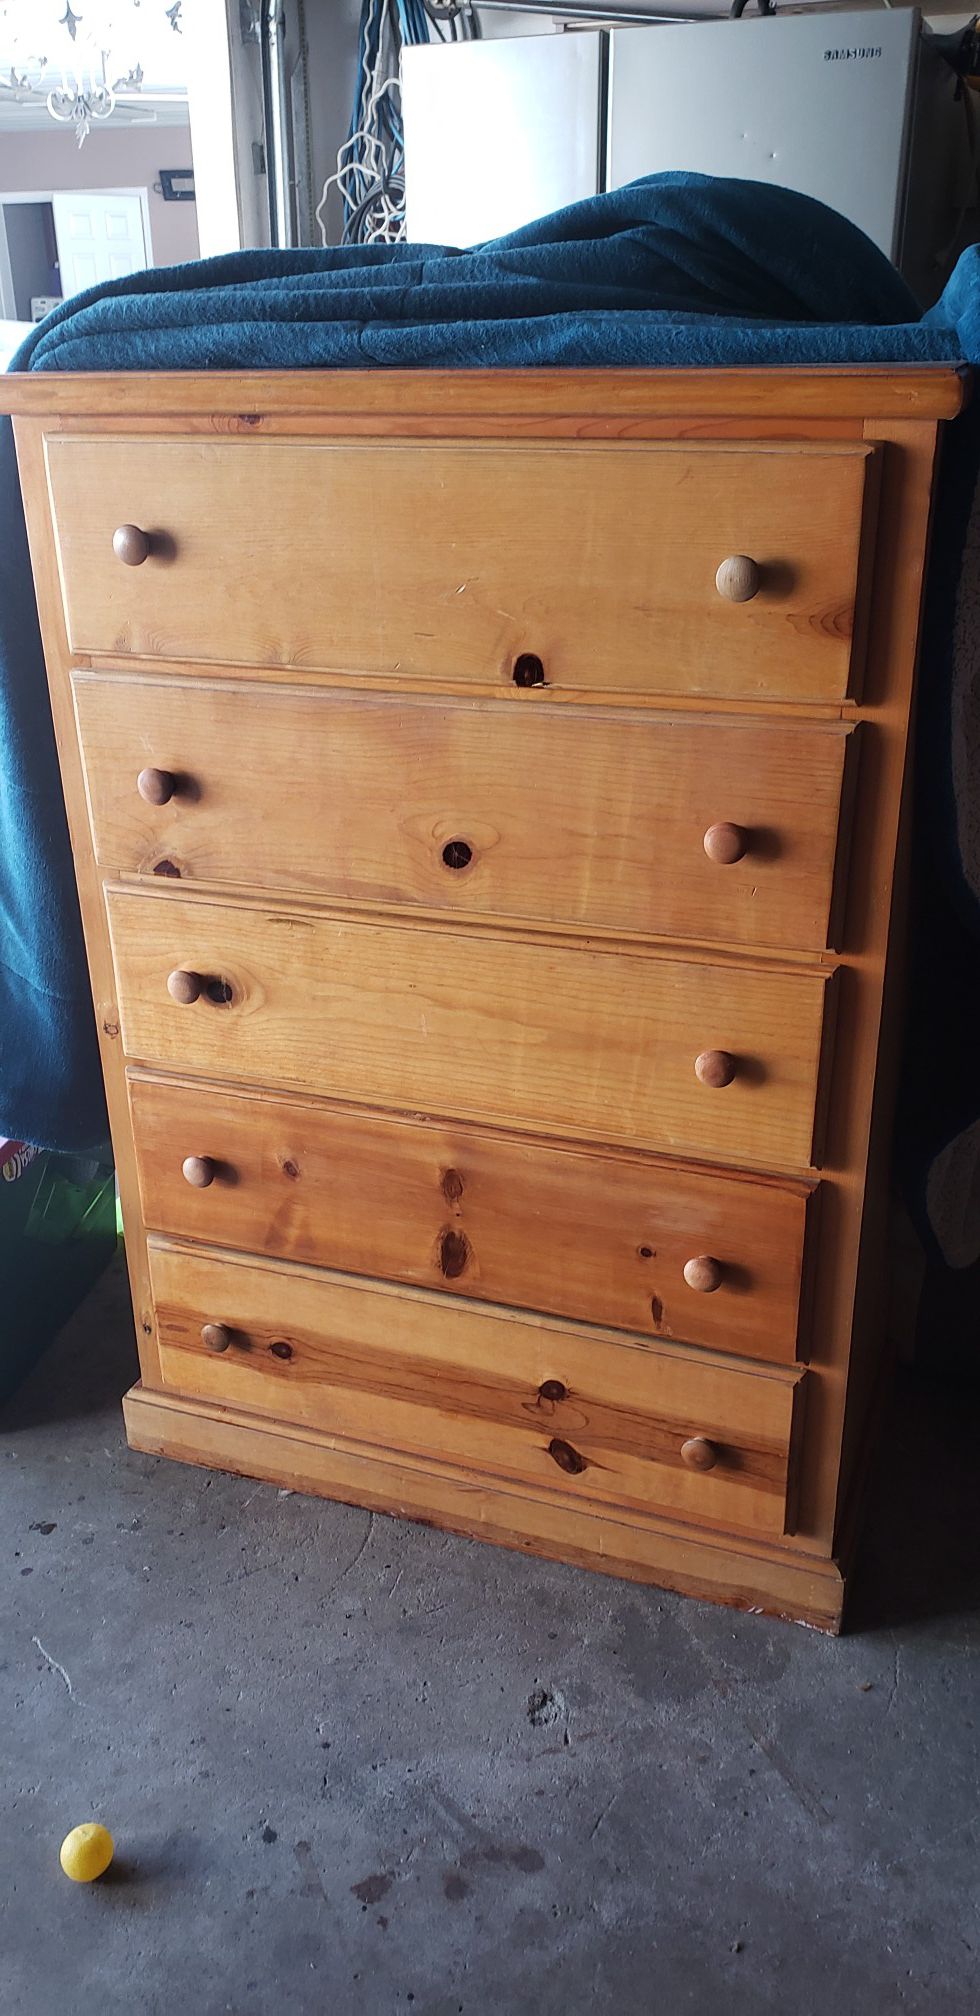 Nice ALL wood dresser drawers